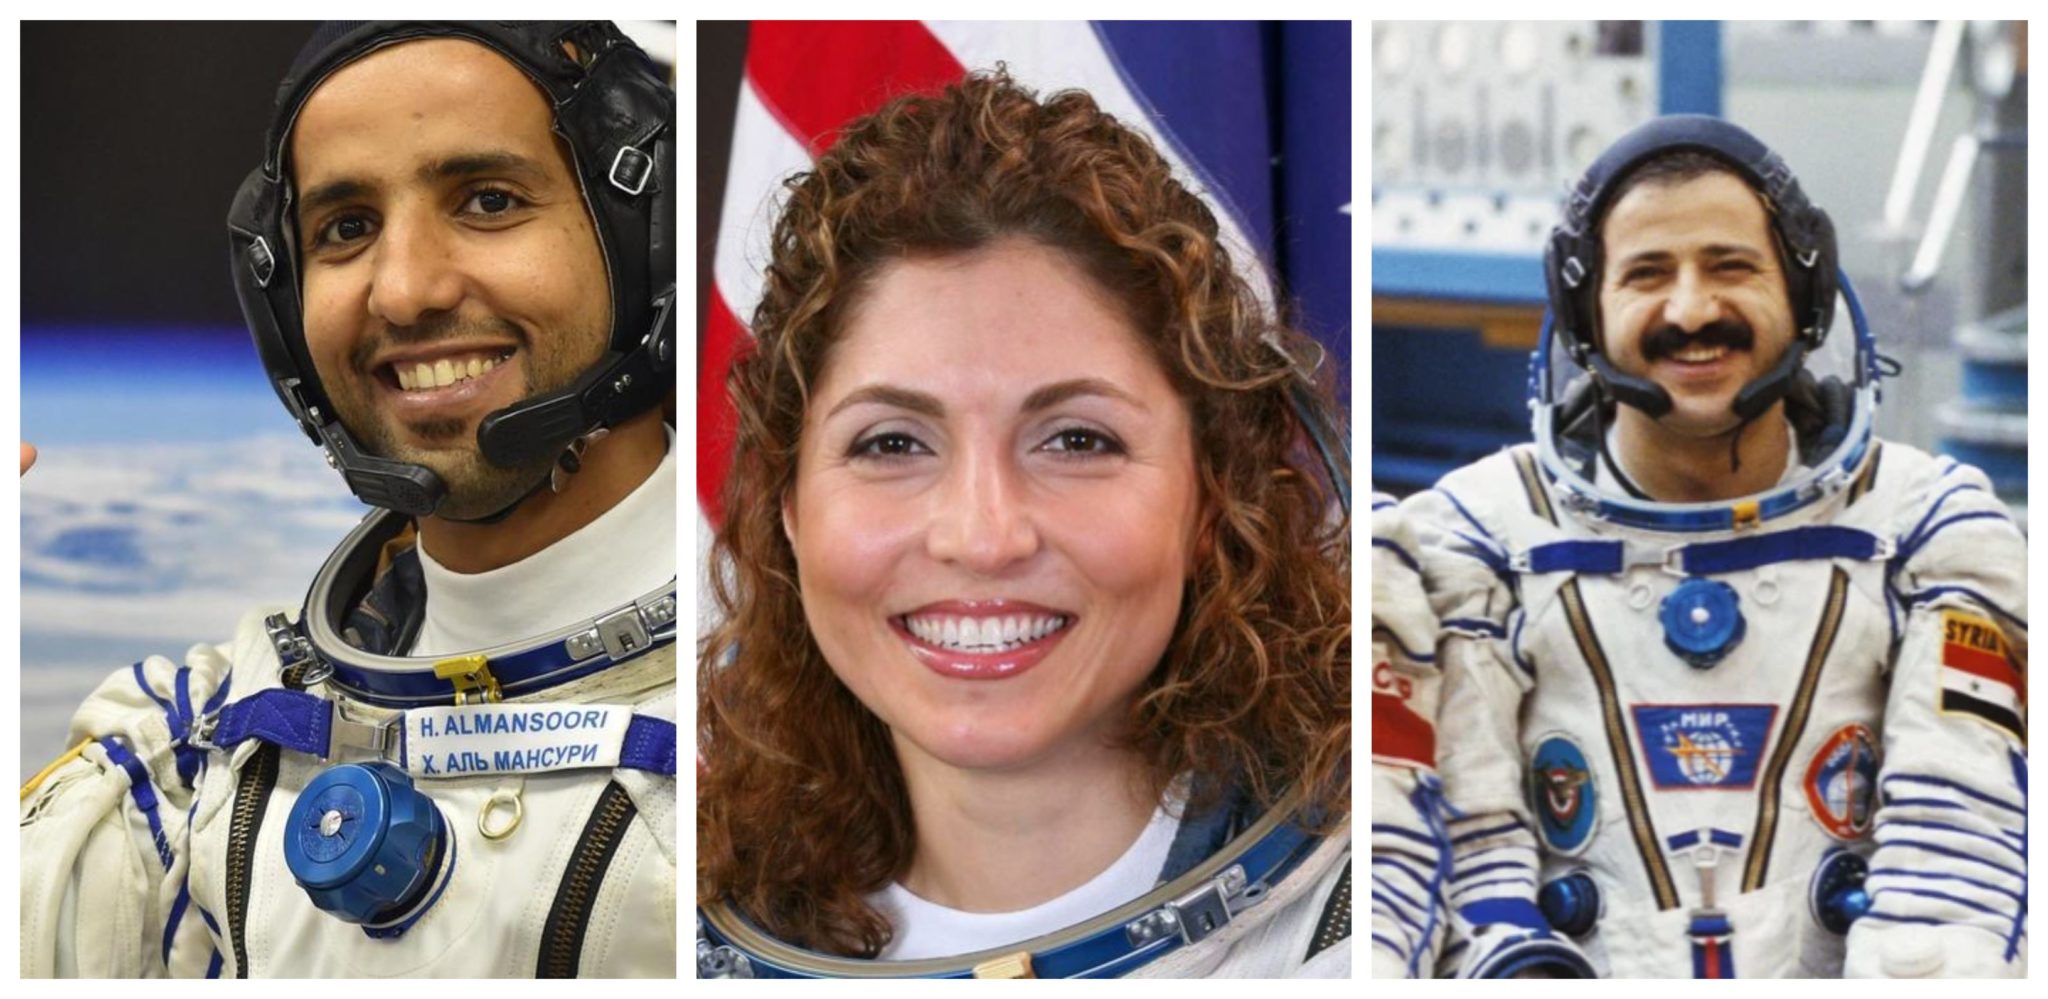 Muslim Astronauts In Space